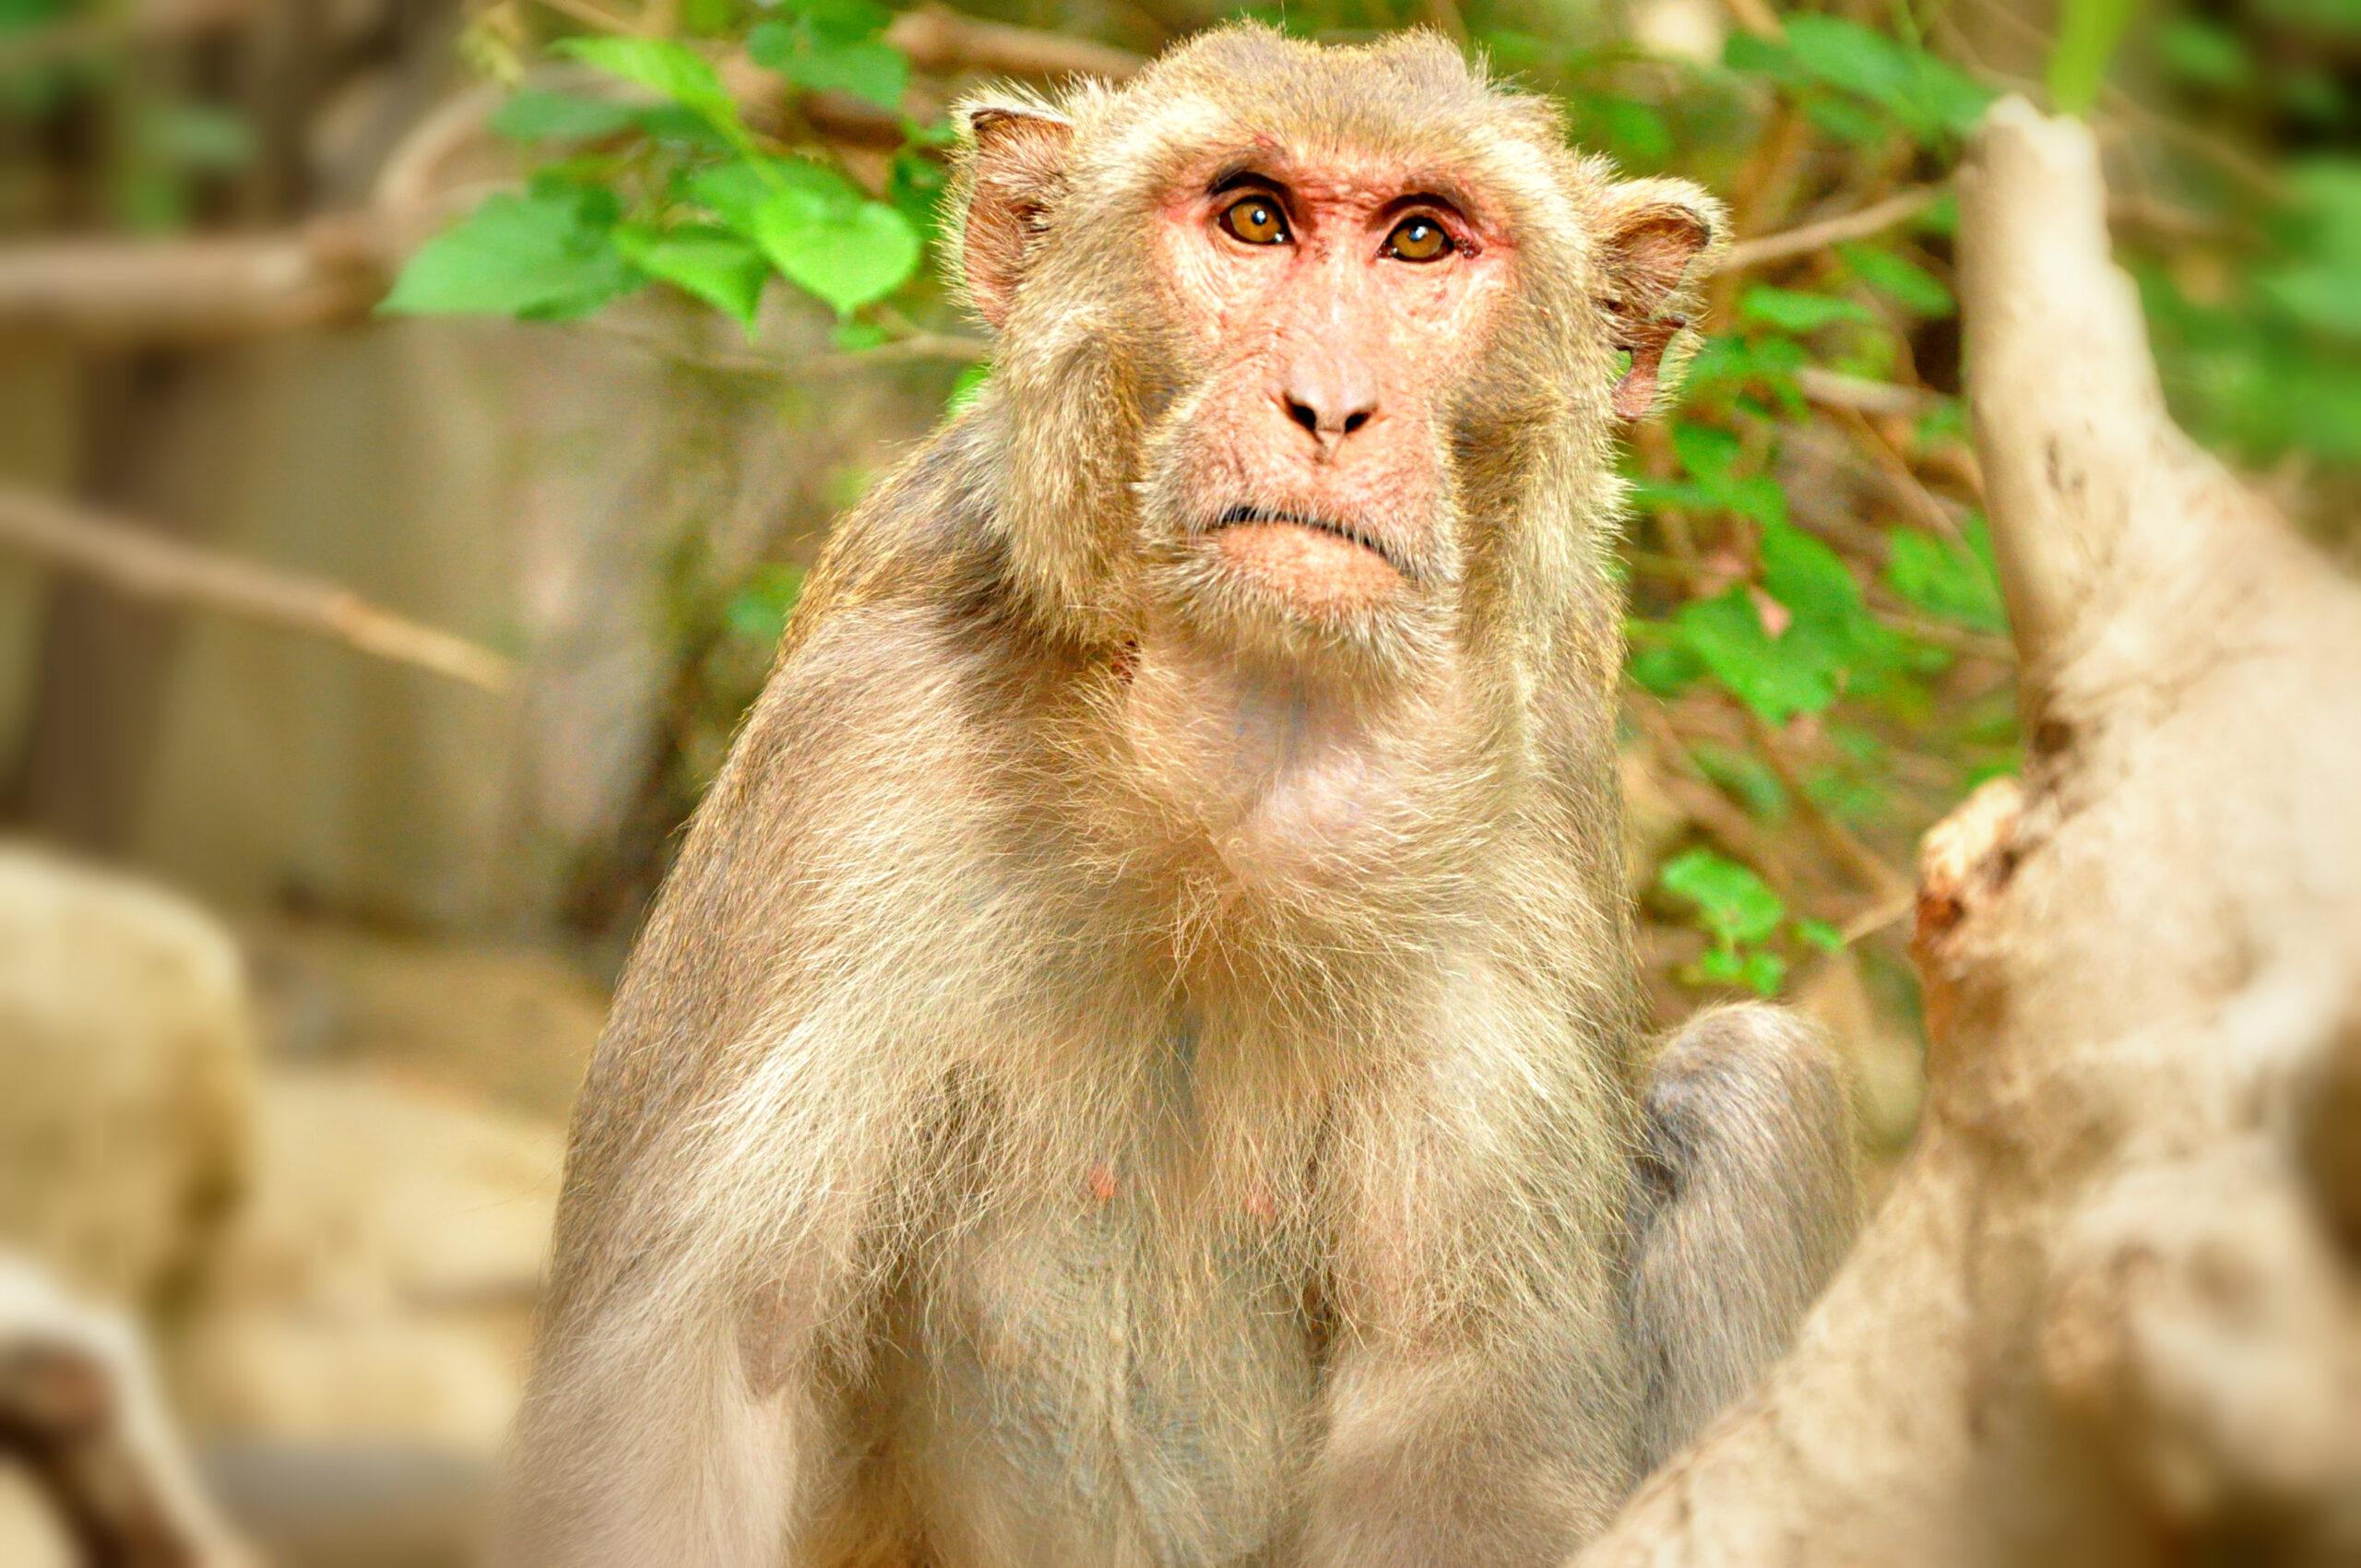 Monkeys Practicing Social Distancing